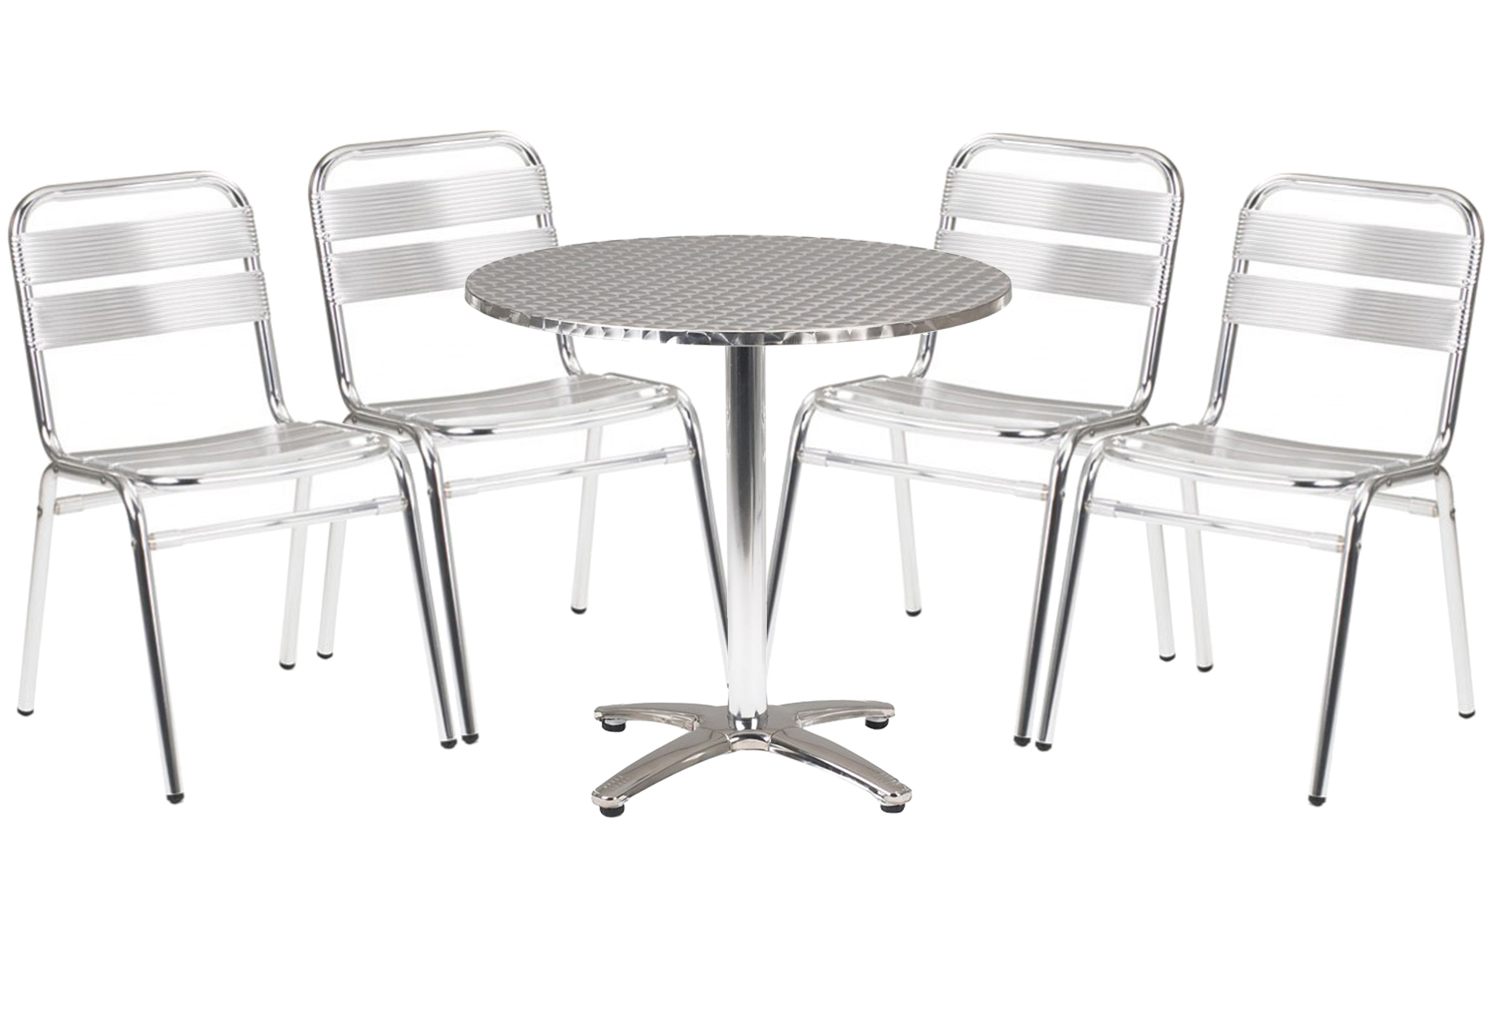 Rio Aluminium Circular Table And 4 Chairs